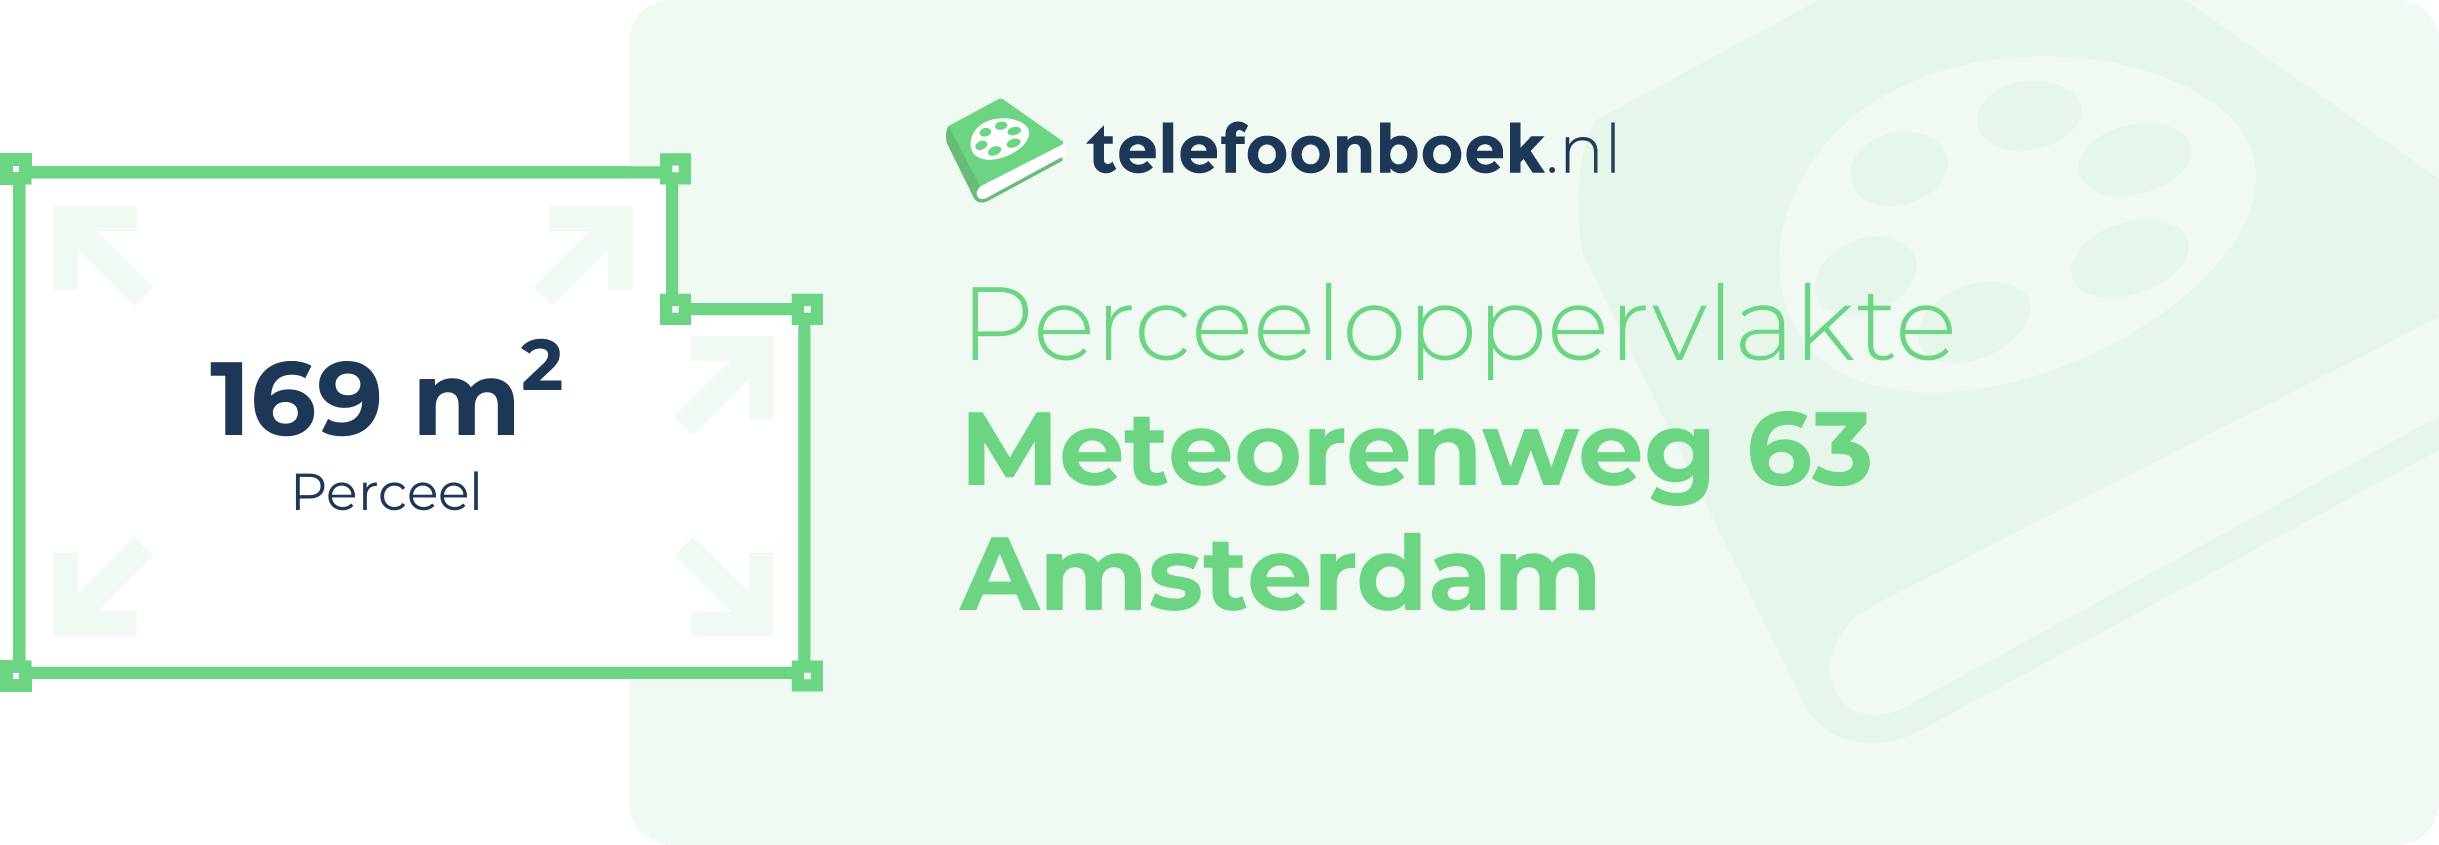 Perceeloppervlakte Meteorenweg 63 Amsterdam